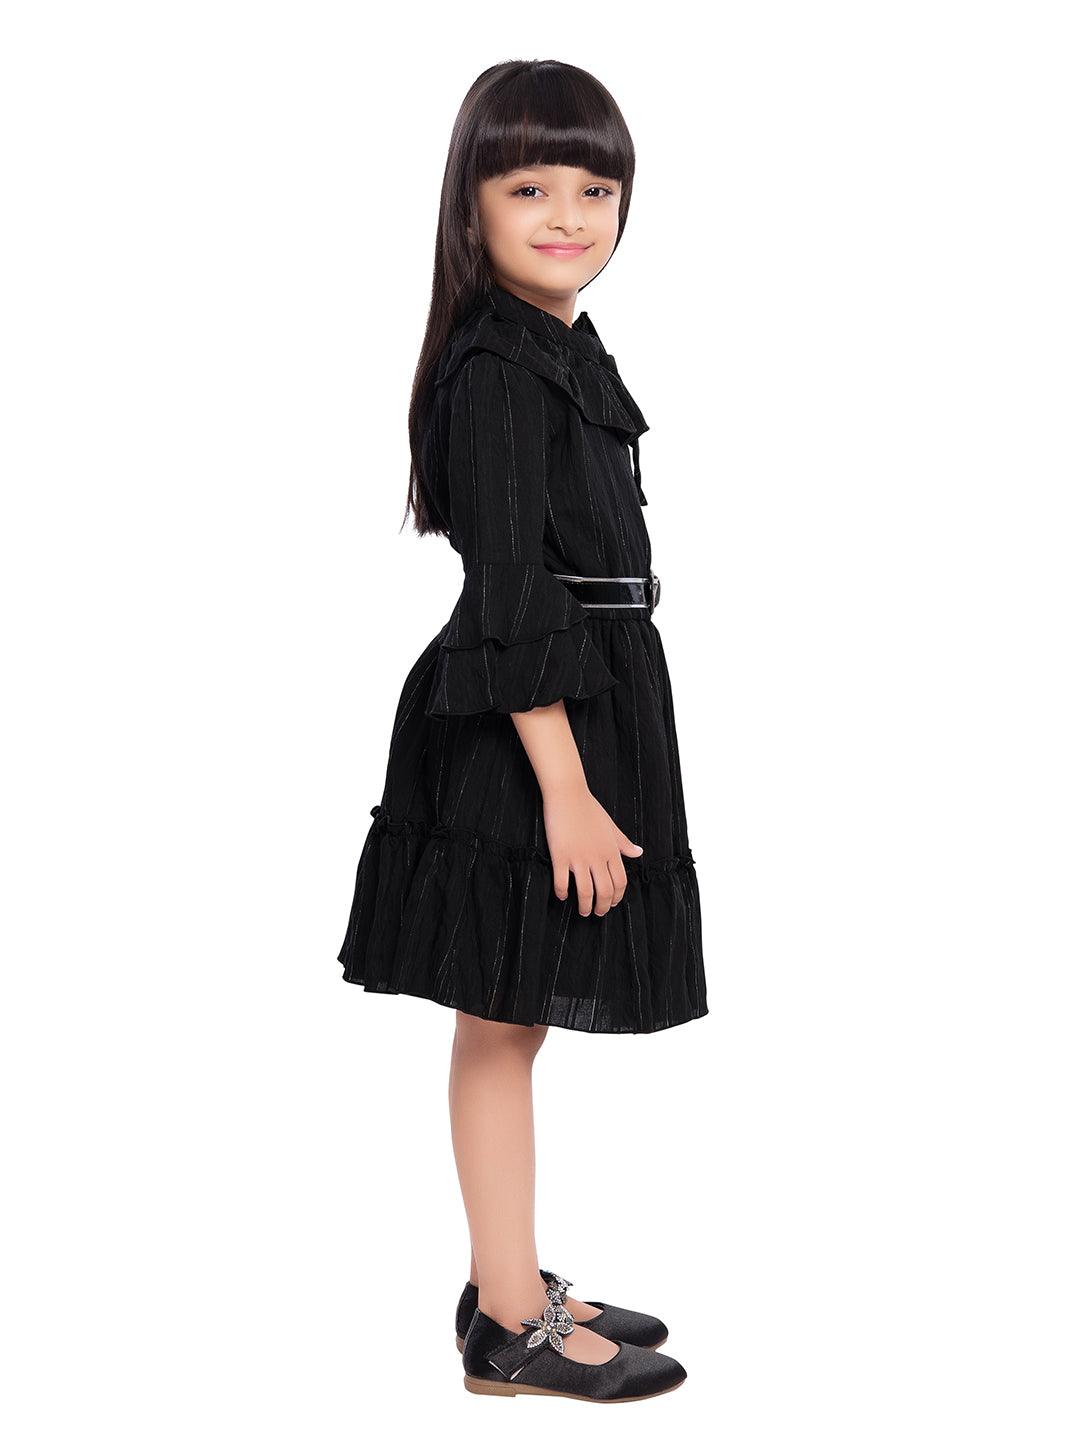 Tiny Baby Black Colored Dress - 2060 Black - TINY BABY INDIA shop.tinybaby.in